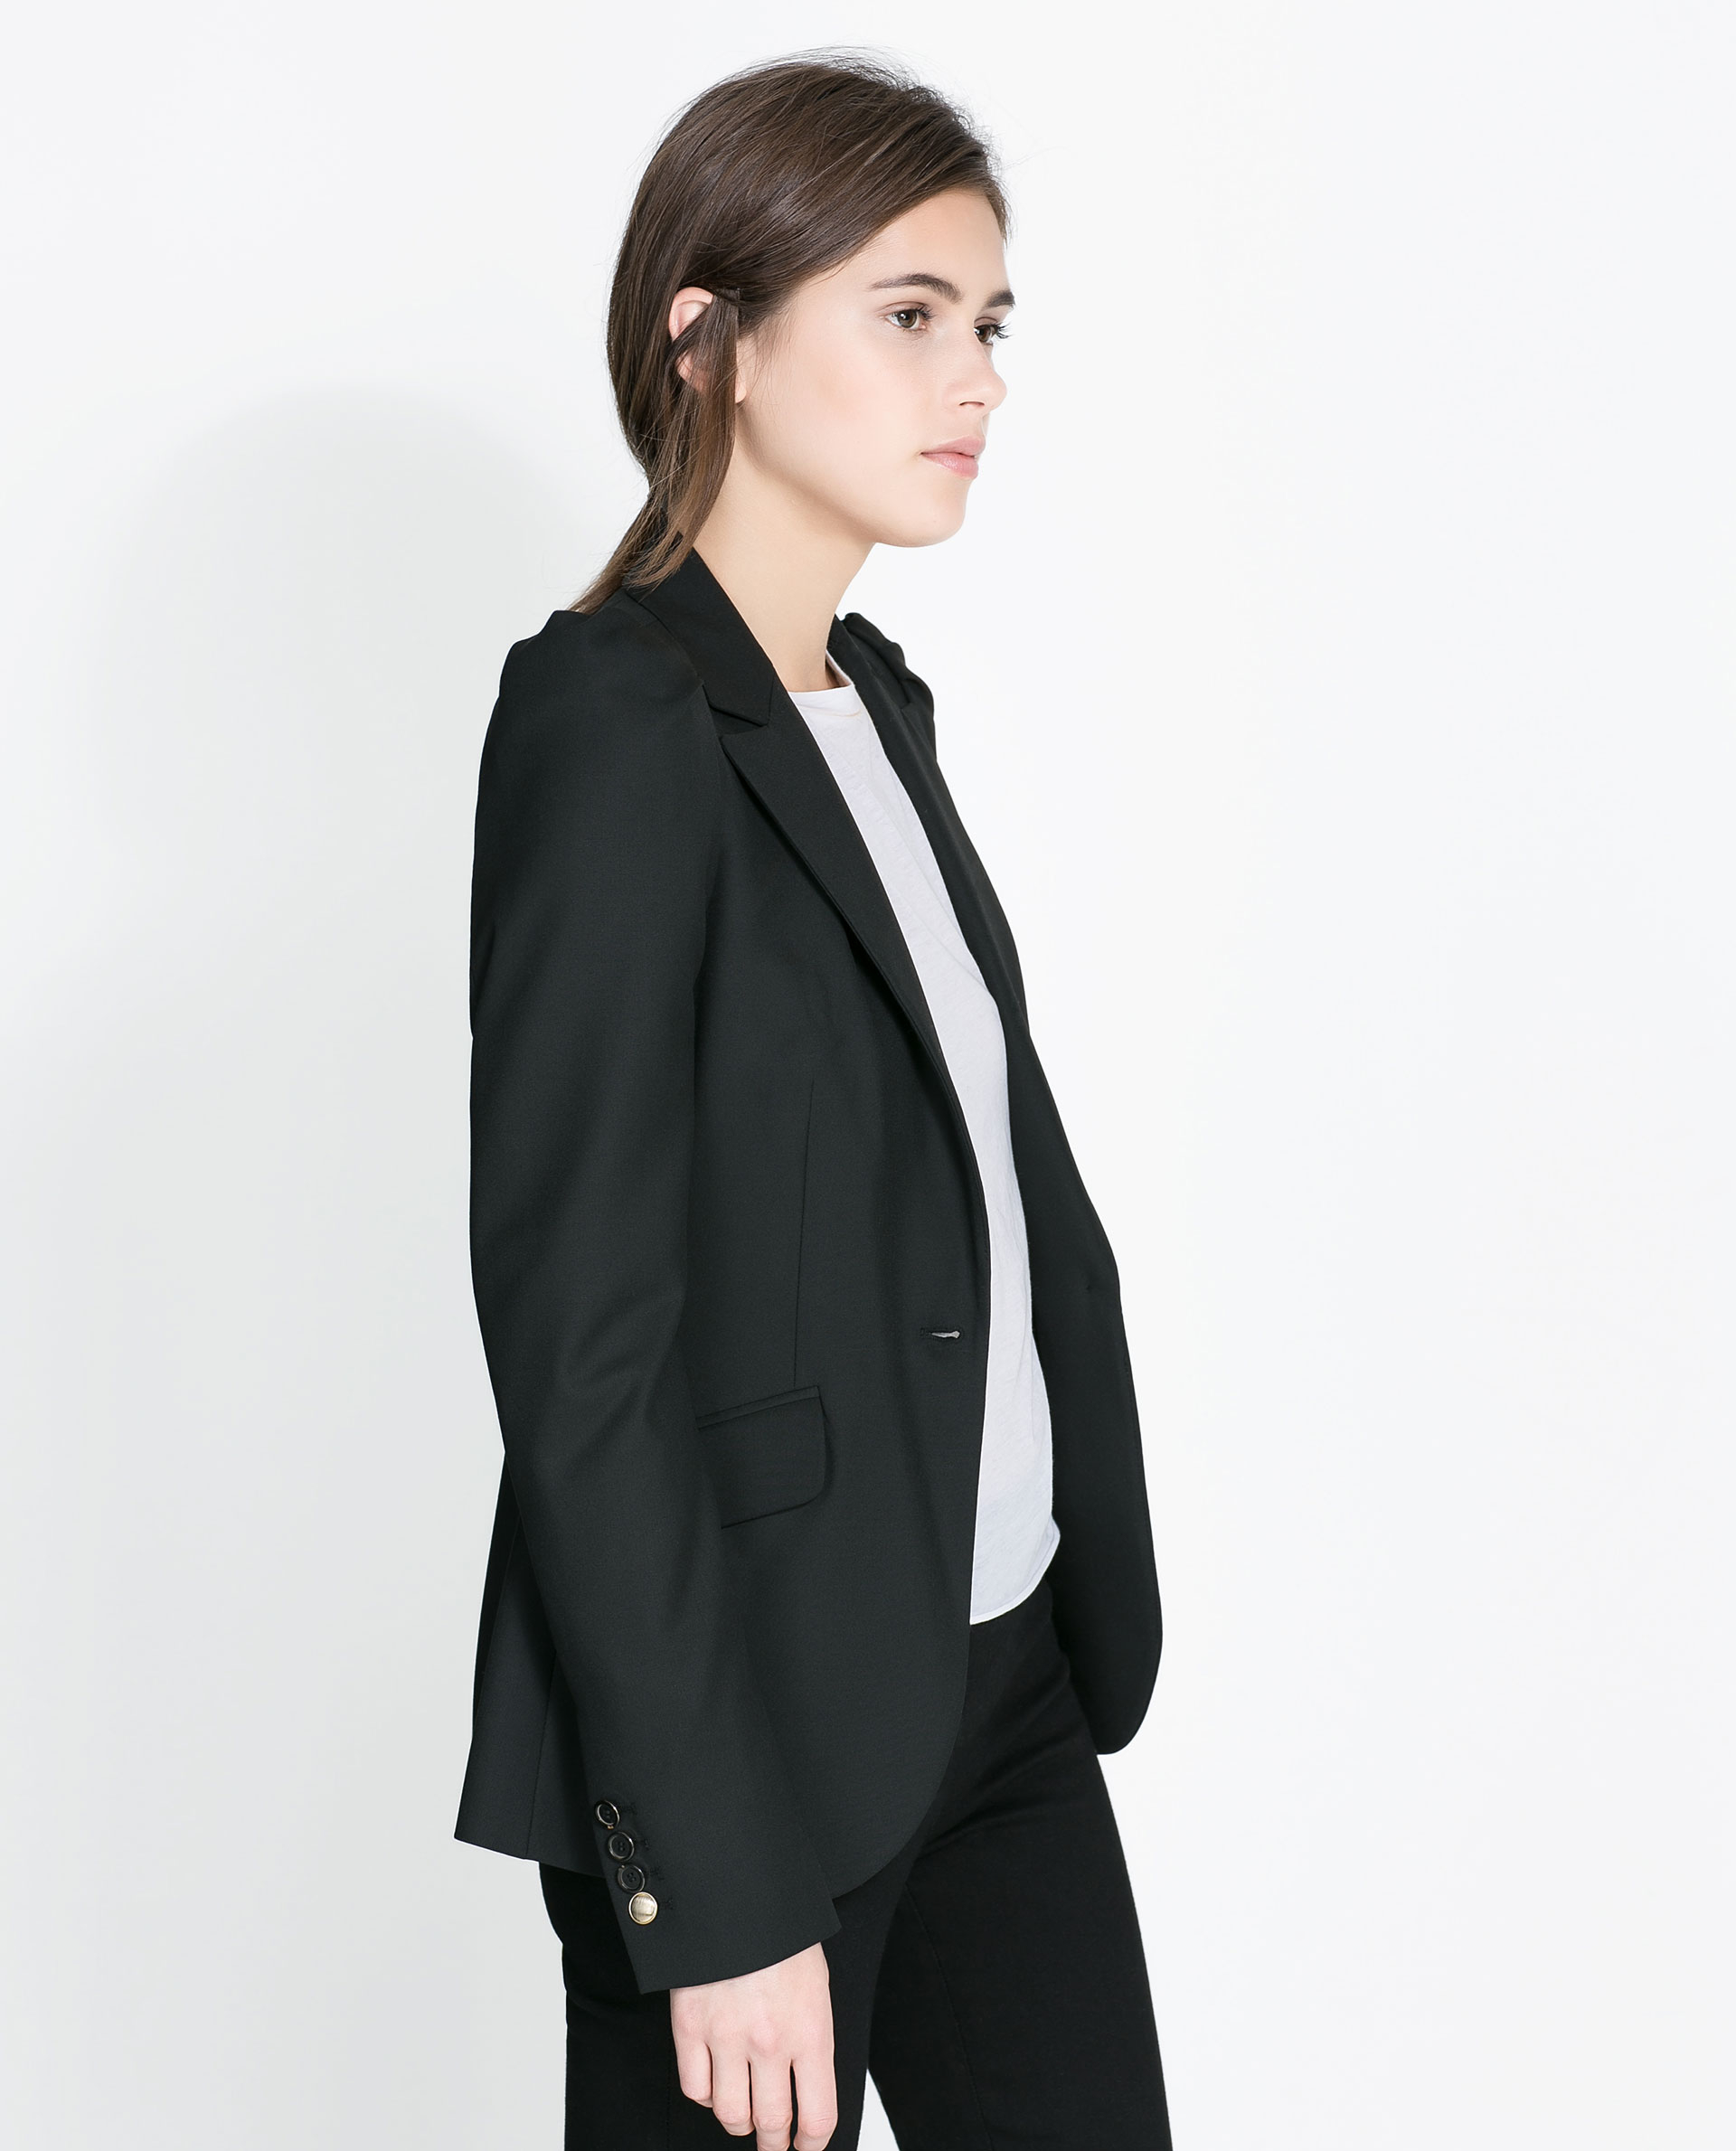 Zara Blazer with Gathered Shoulders in Black | Lyst